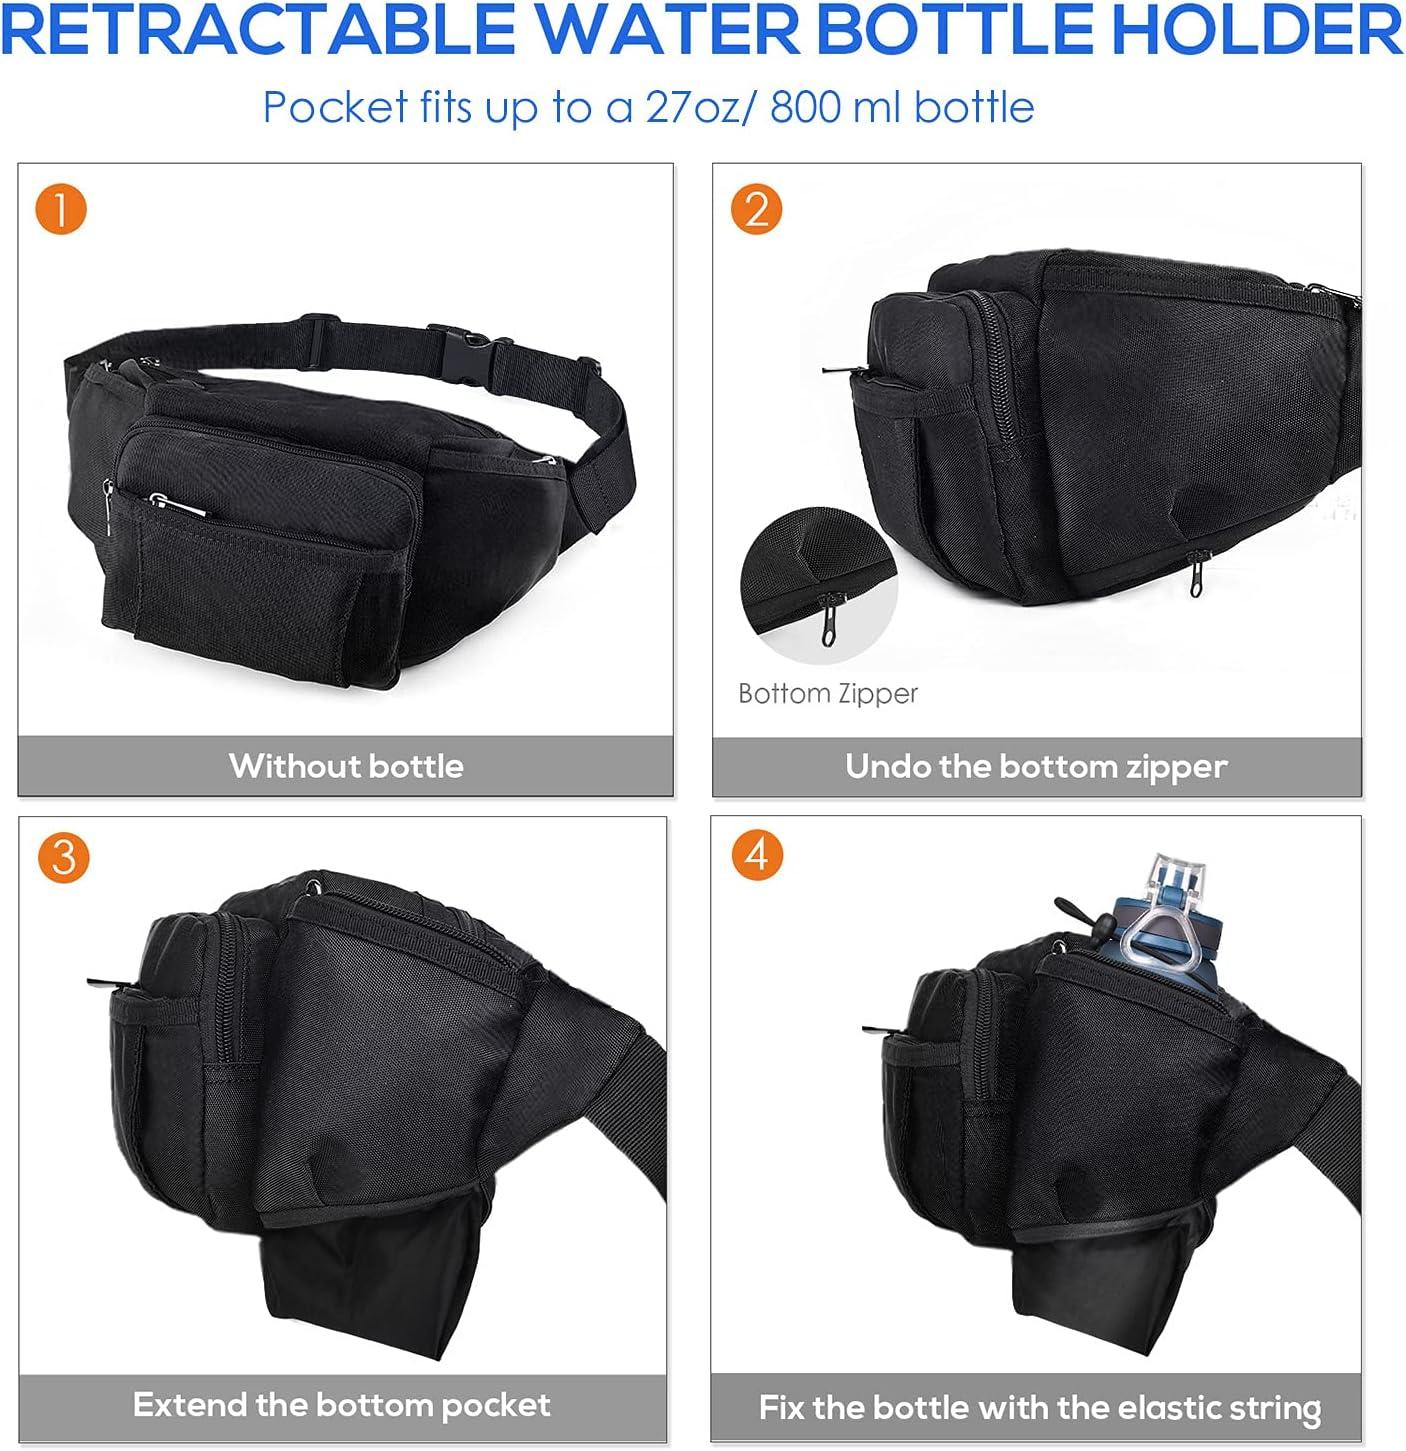 Adjustable Water Bottle Carrier Bag For Hiking, Traveling, And